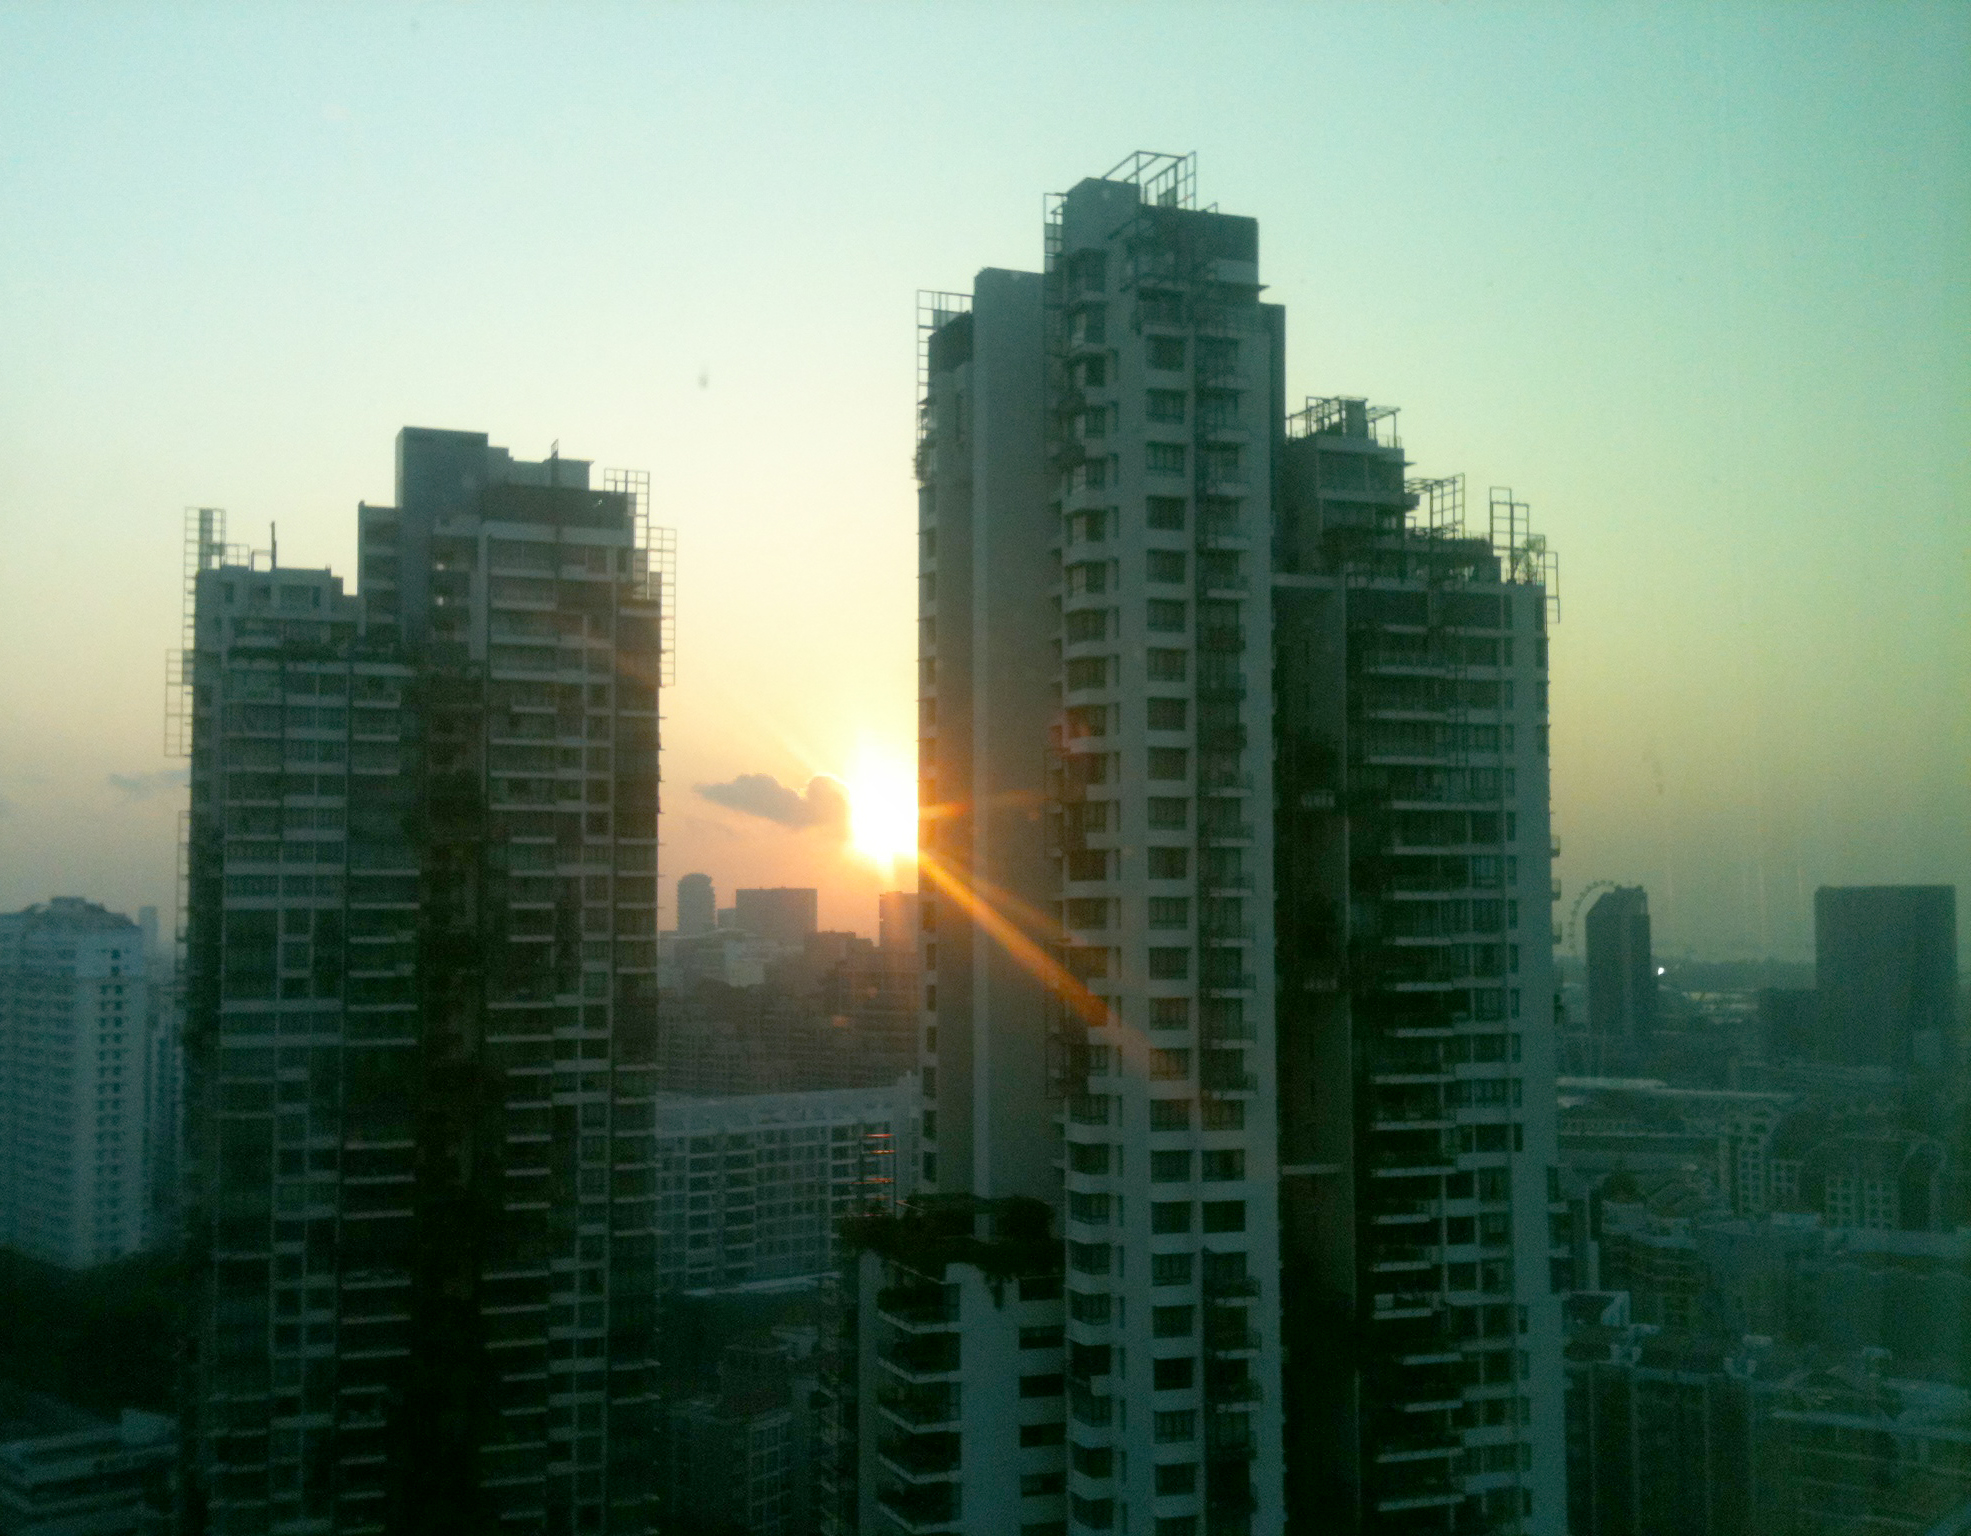 Singapore Sunrise